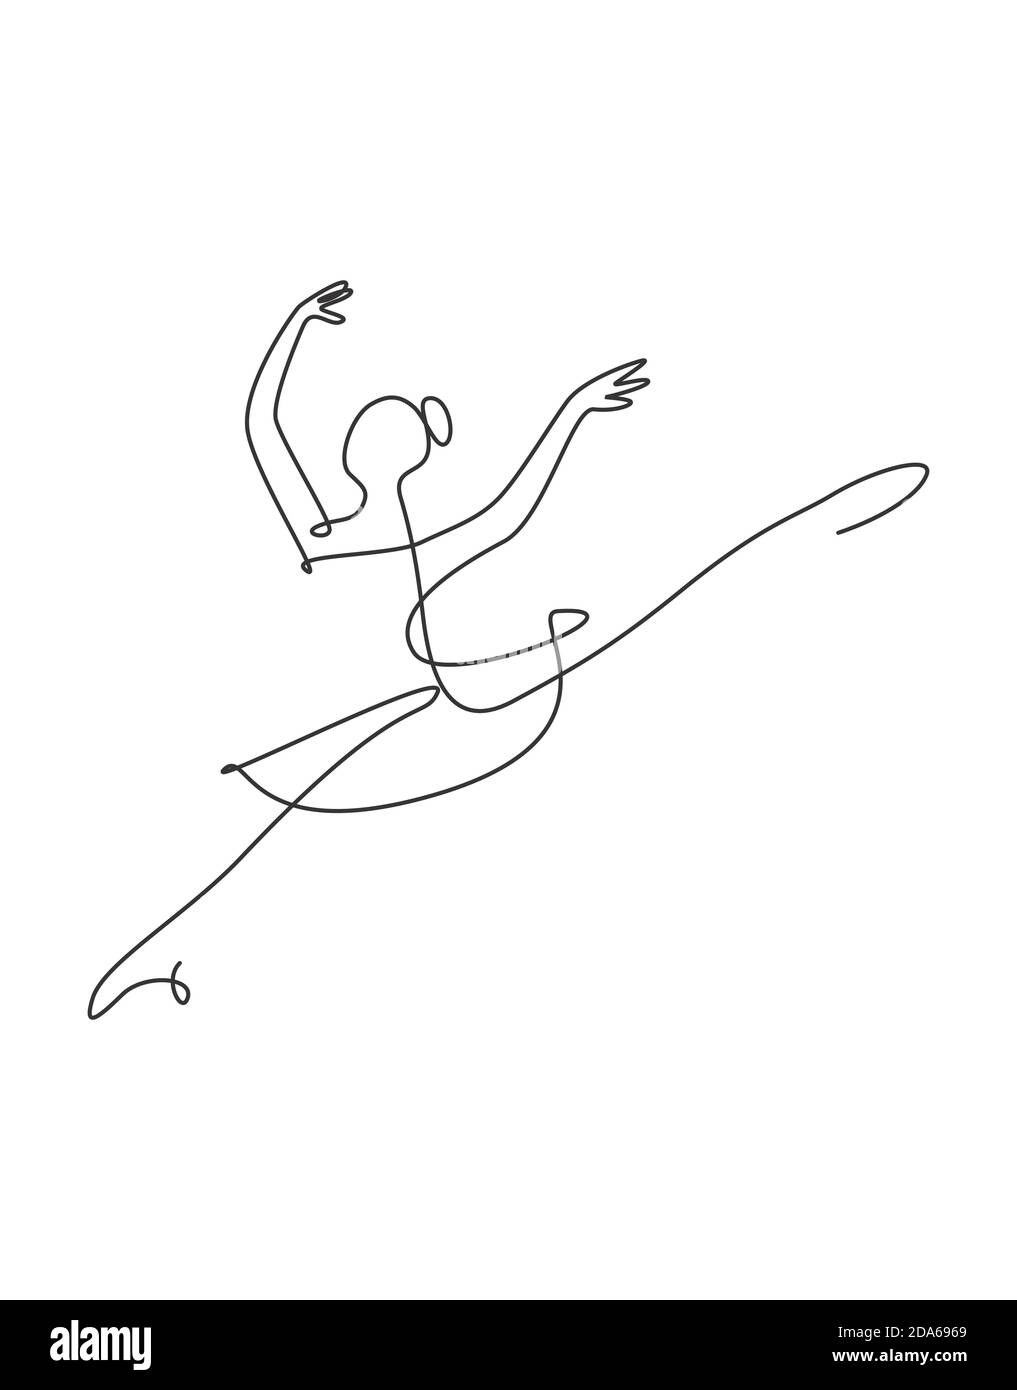 Bailarina de dibujo de línea continua única en estilo de danza de  movimiento de ballet. Belleza minimalista bailarín concepto logo,  escandinavo cartel de arte Imagen Vector de stock - Alamy